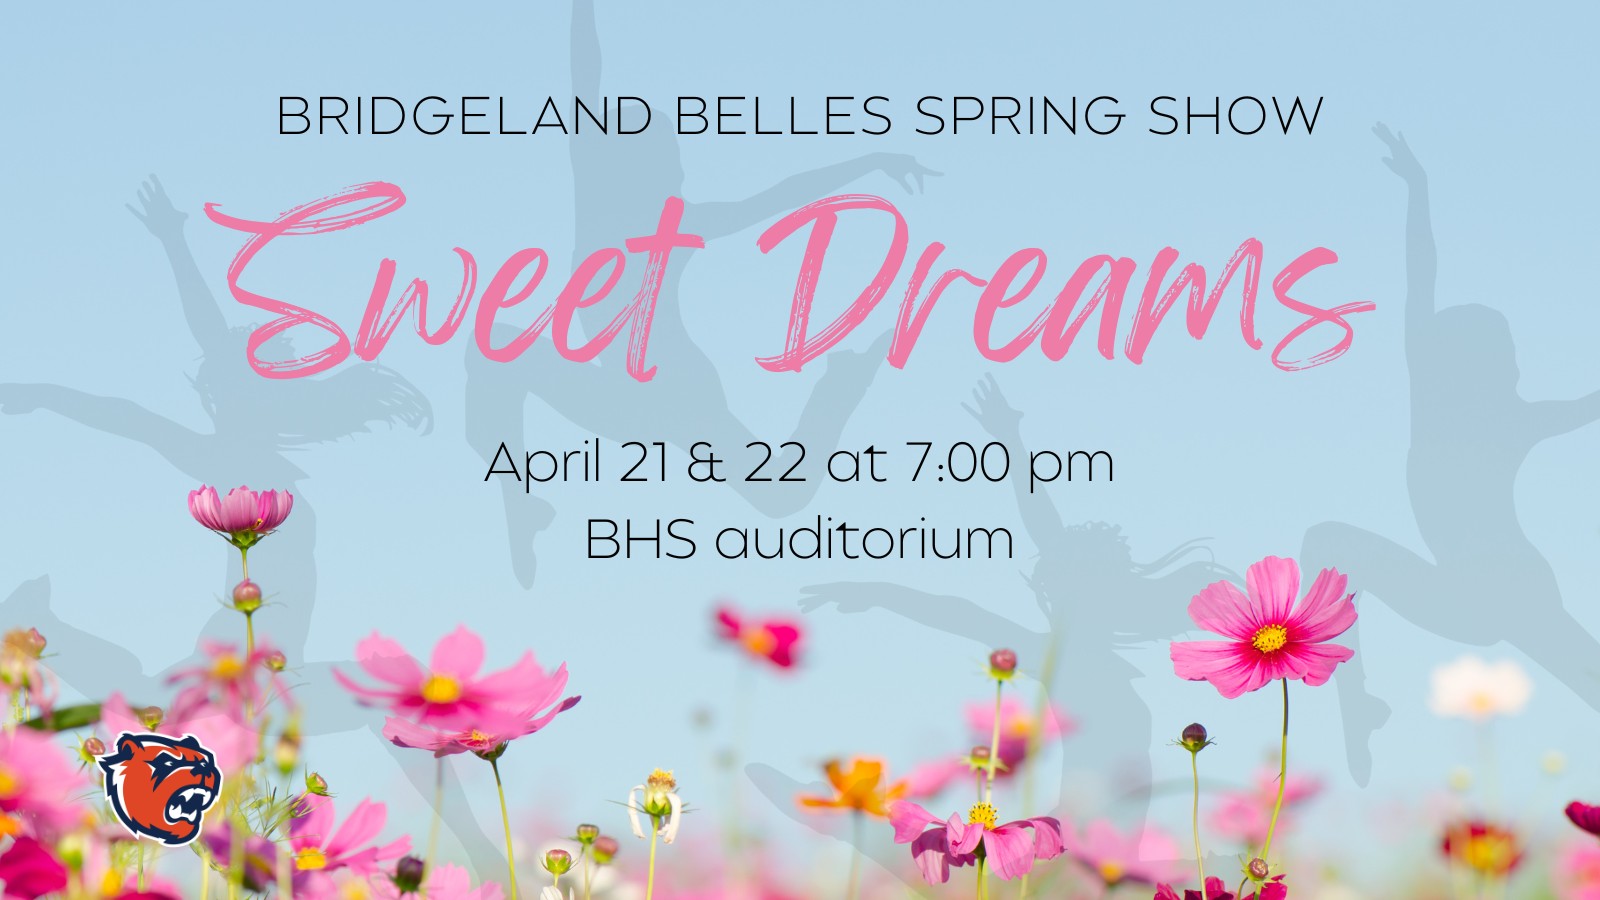 Bridgeland Belles Spring Show SWEET DREAMS - April 21 & 22